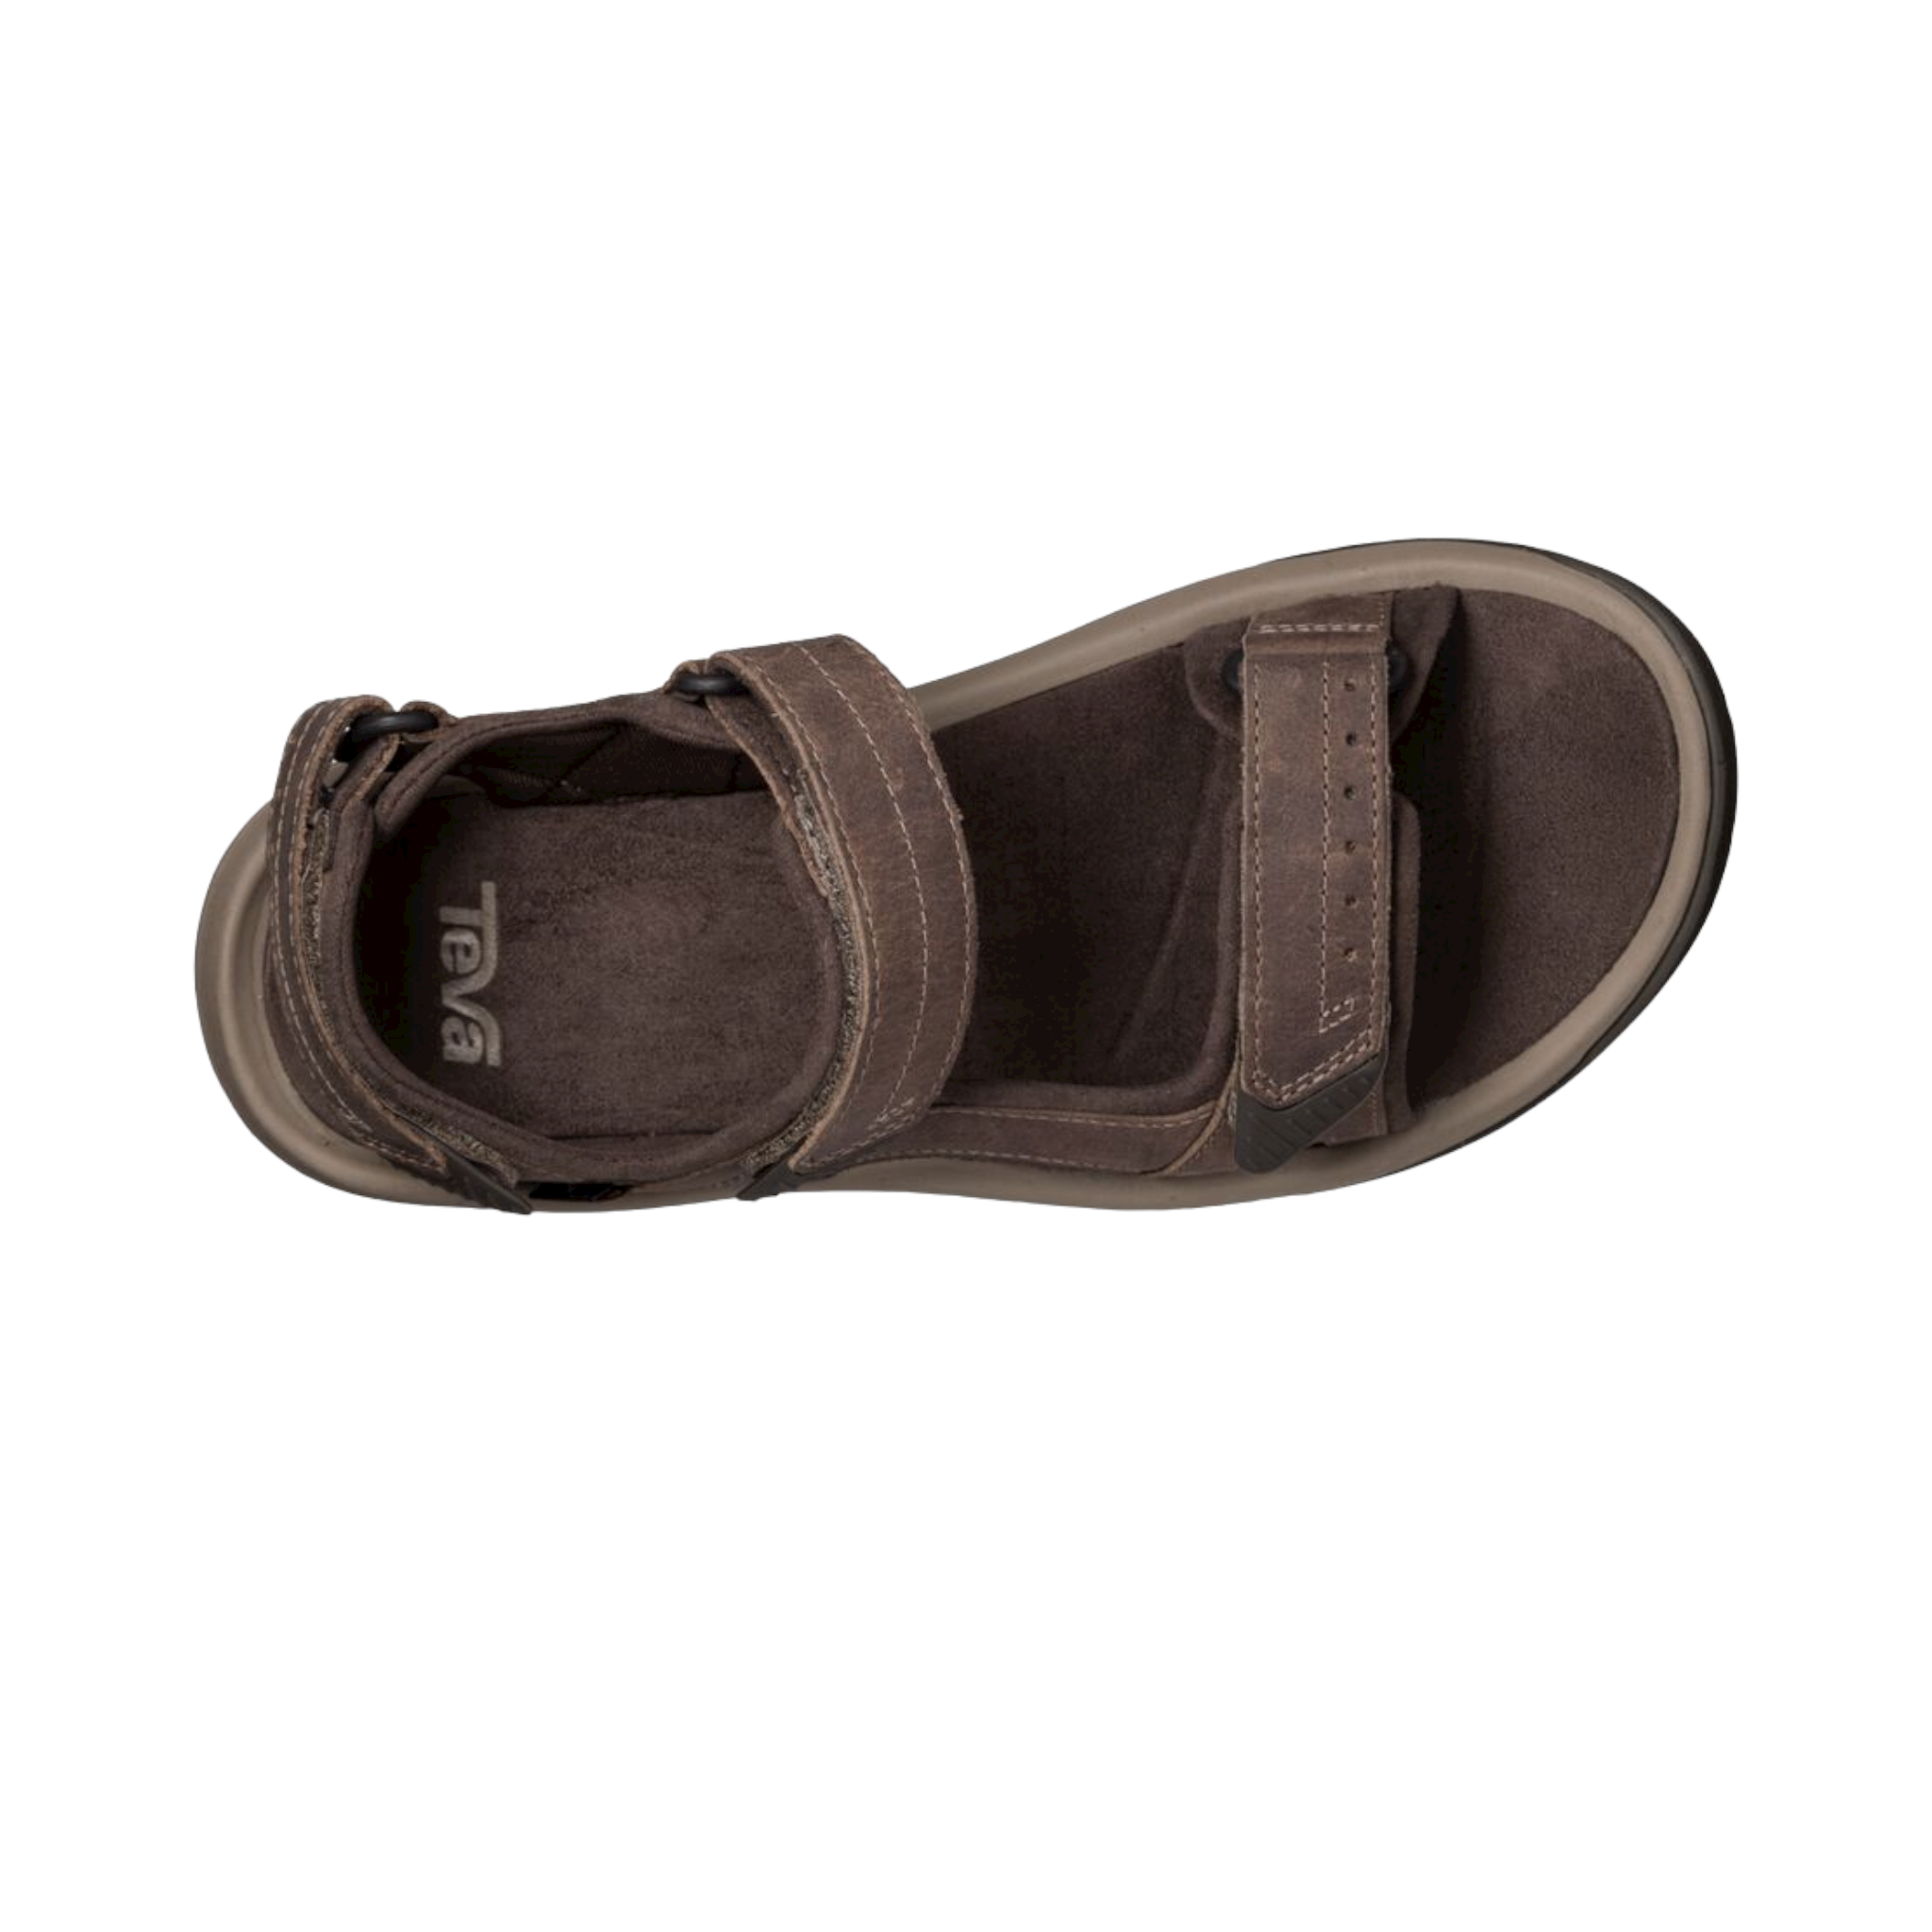 M Langdon - shoe&me - Teva - Sandal - Eco Collection, Mens, Sandal, Summer 22